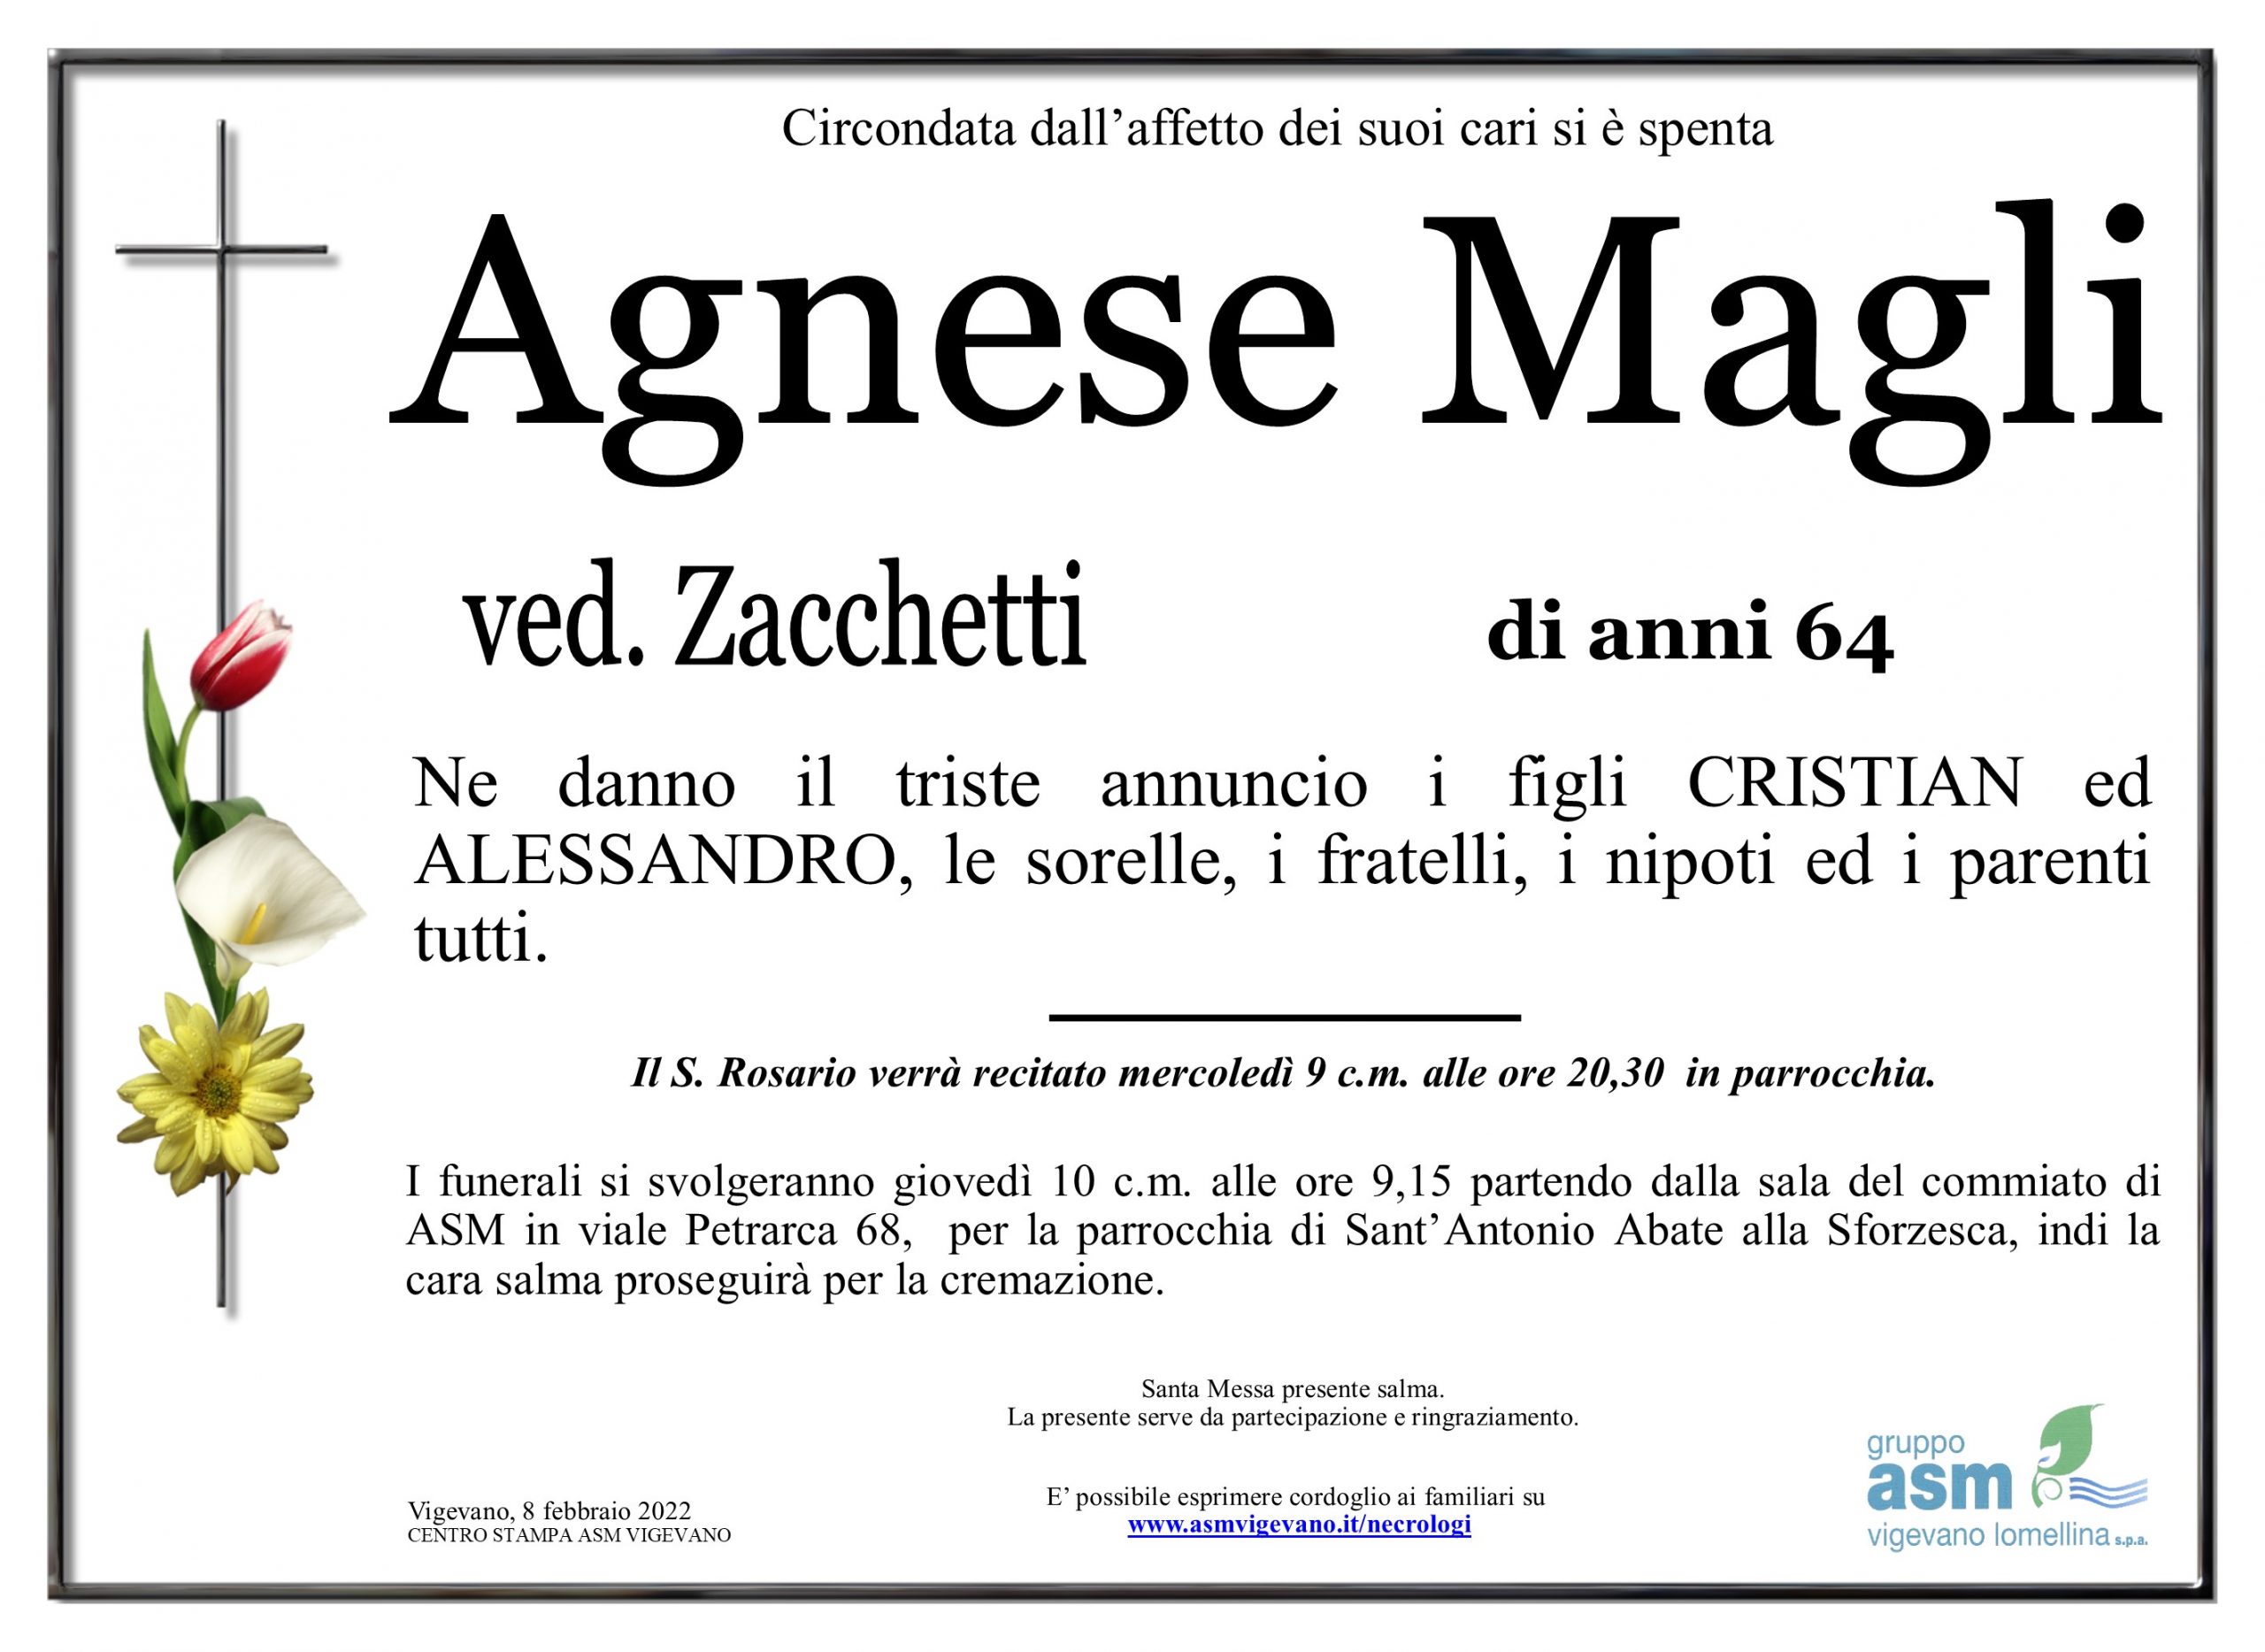 Agnese Magli